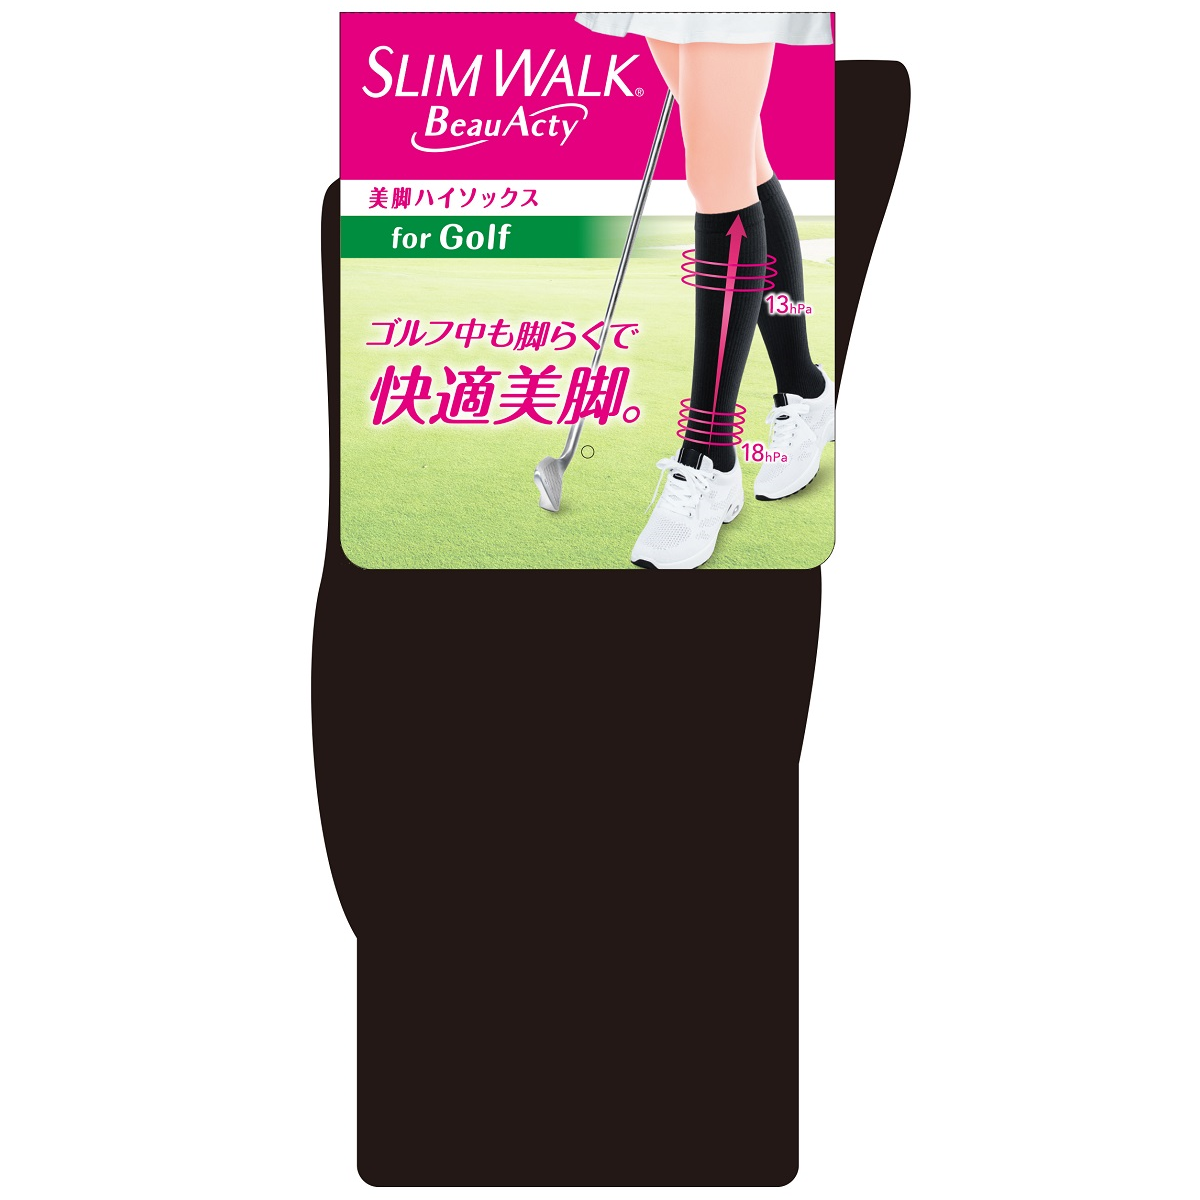 SLIMWALK BeauActy Compression Socks for Golf Black 23-25 cm/ถุงเท้ากระชับเรียวขา 1 คู่ (สีดำ)